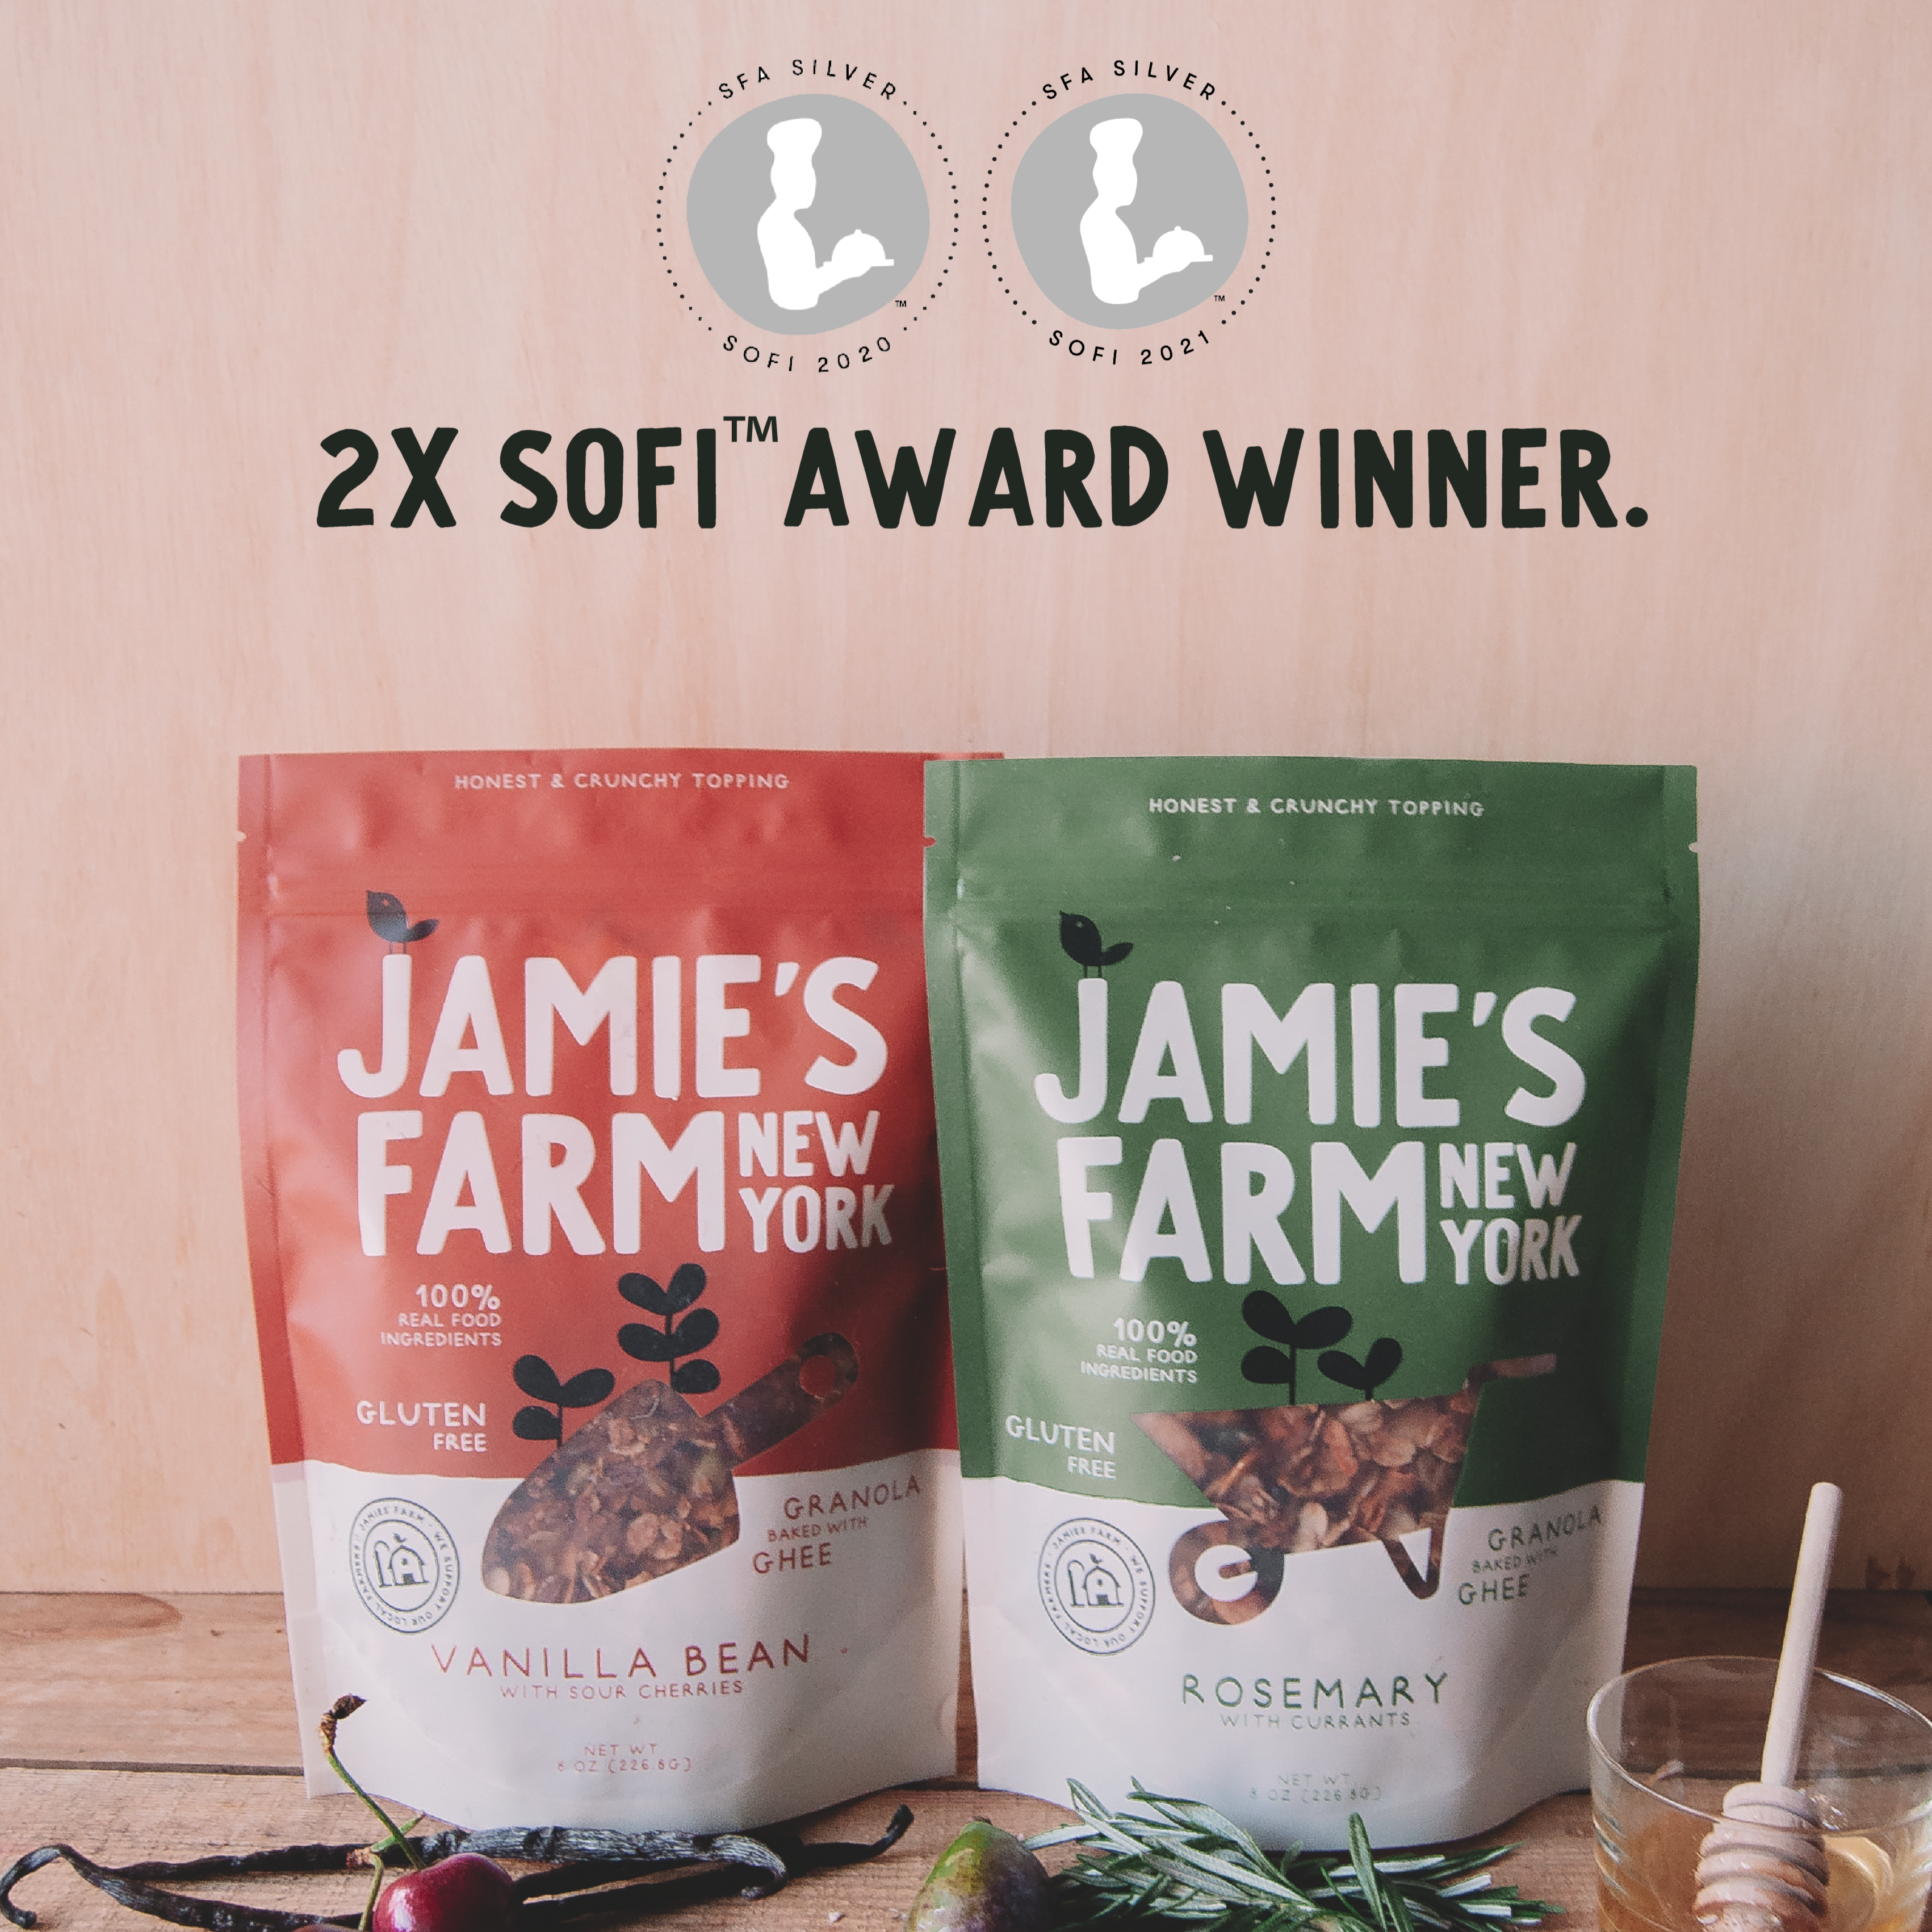 Jamie's Farm New York Granola | sofi Award-winning, Gluten-Free, the best granola ever